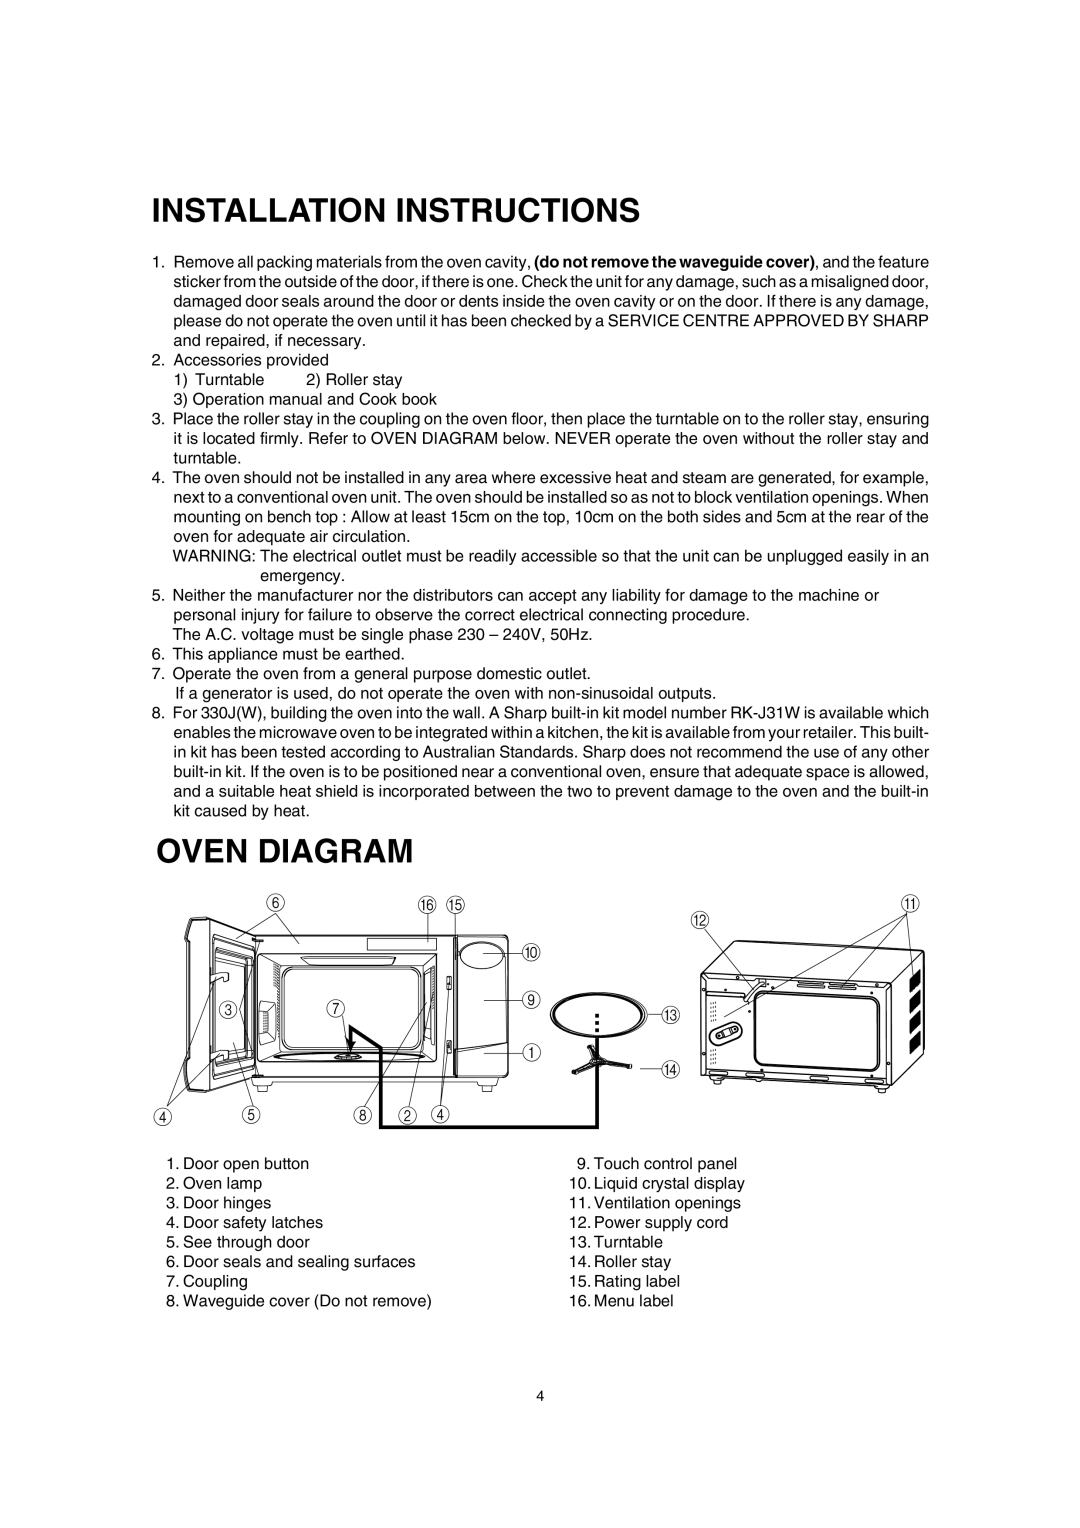 Sharp R-330J(W), R-330J(S) manual Installation Instructions, Oven Diagram 